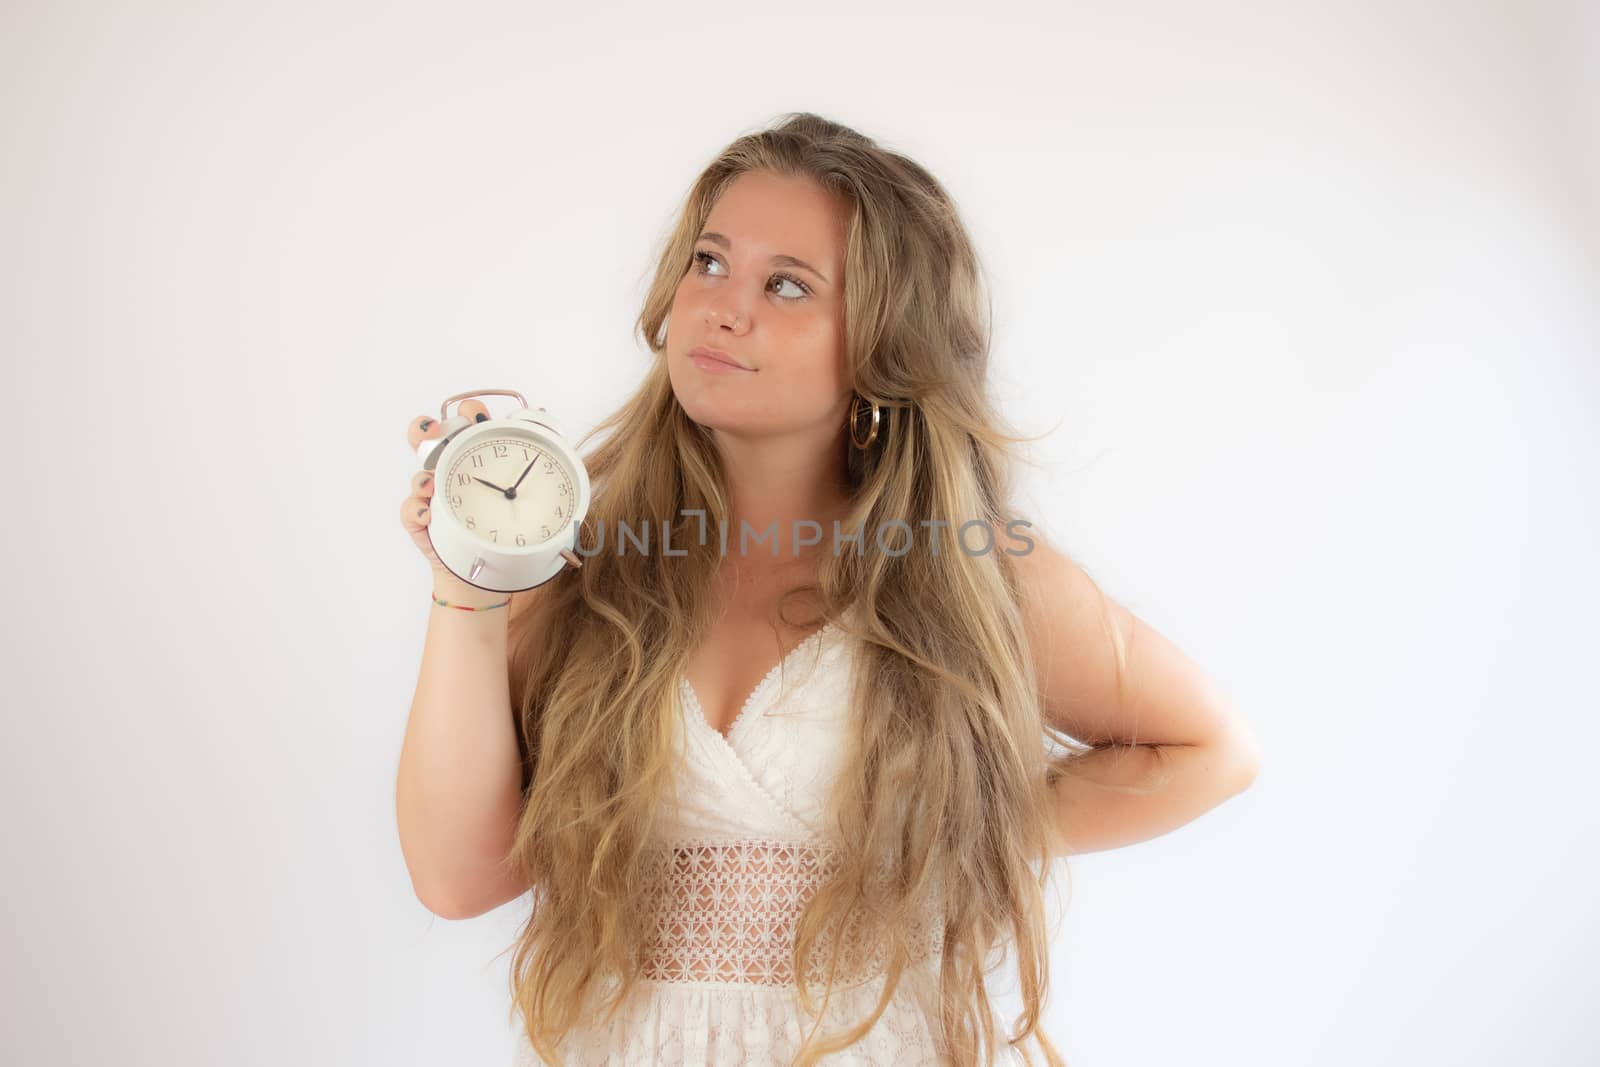 Pretty blonde girl in a white dress showing a clock